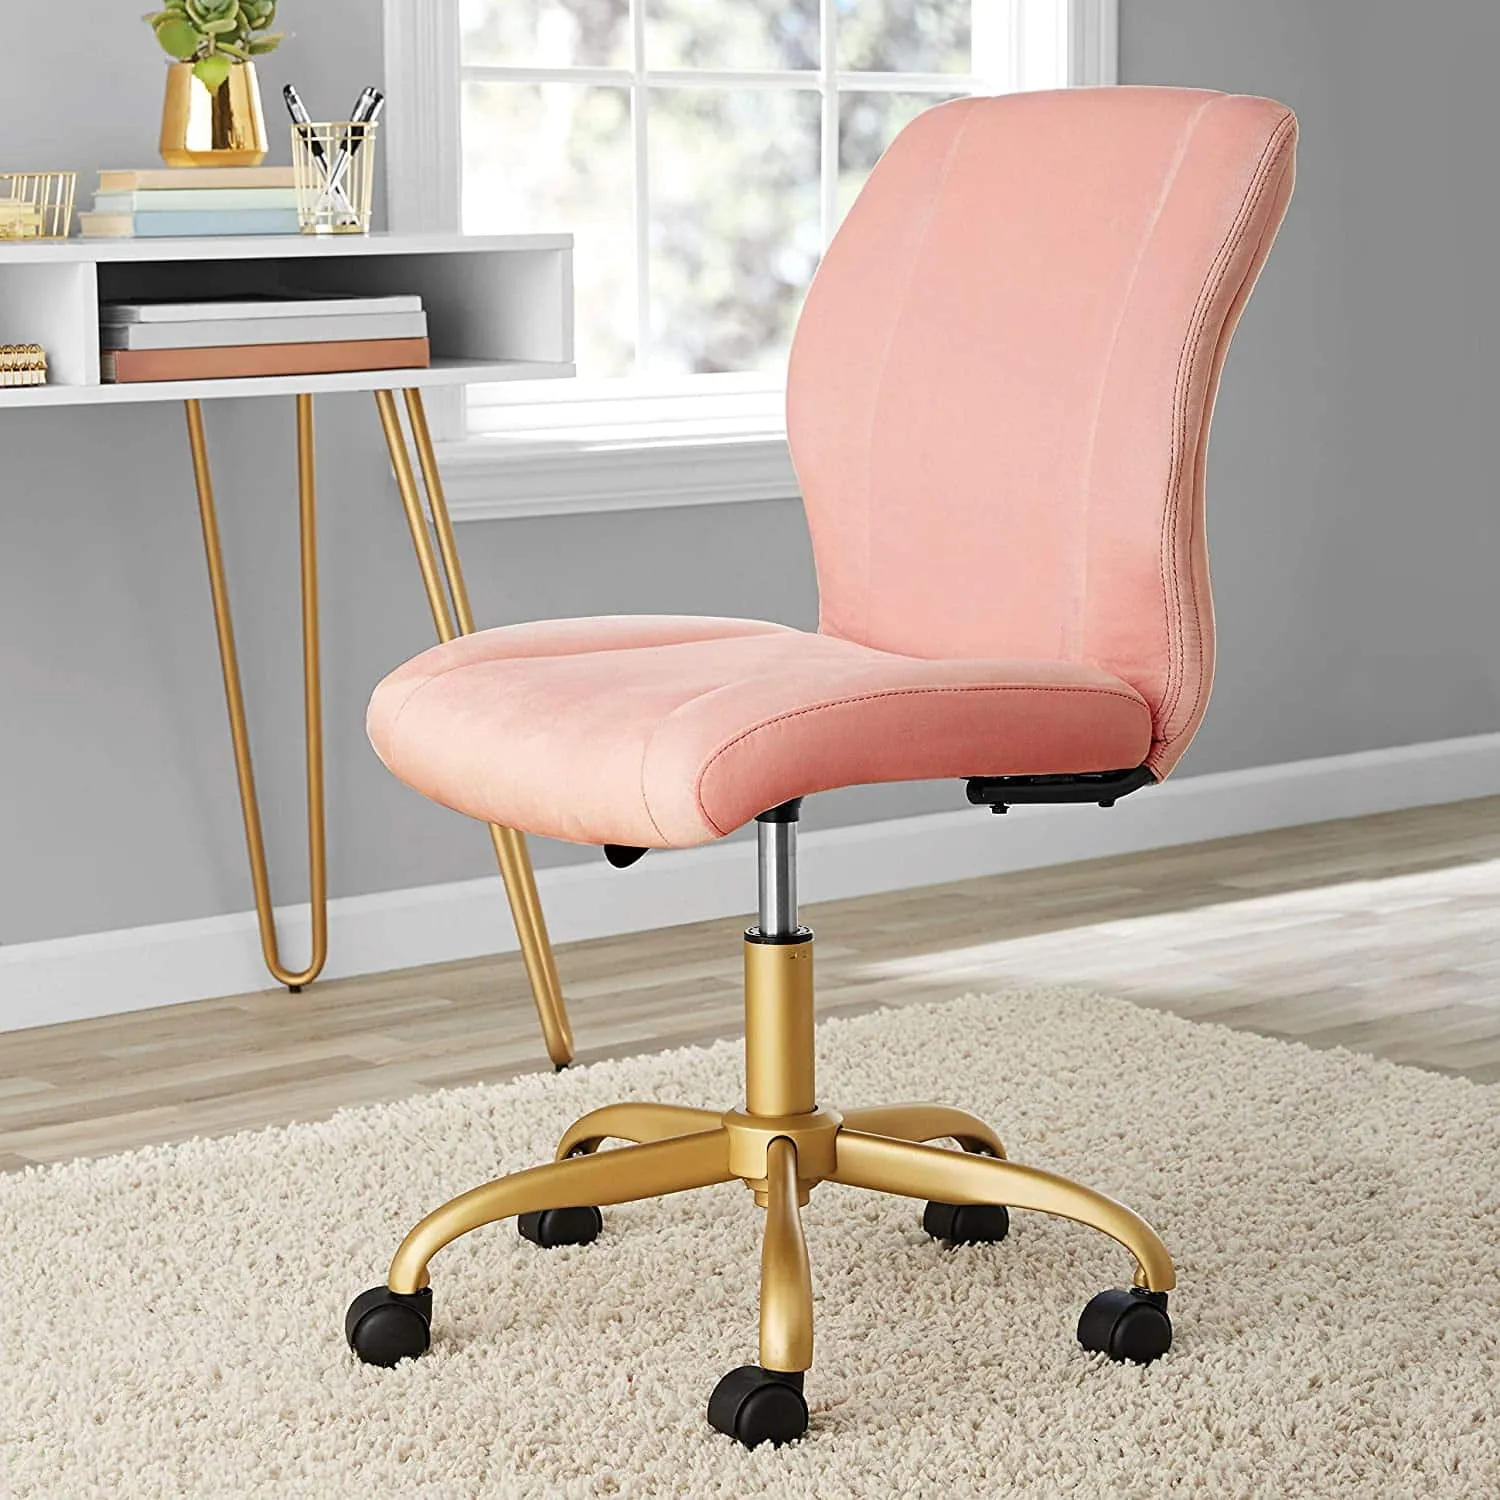 Chic,Elegant,Durable and Comfortable Plush Velvet Office Chair